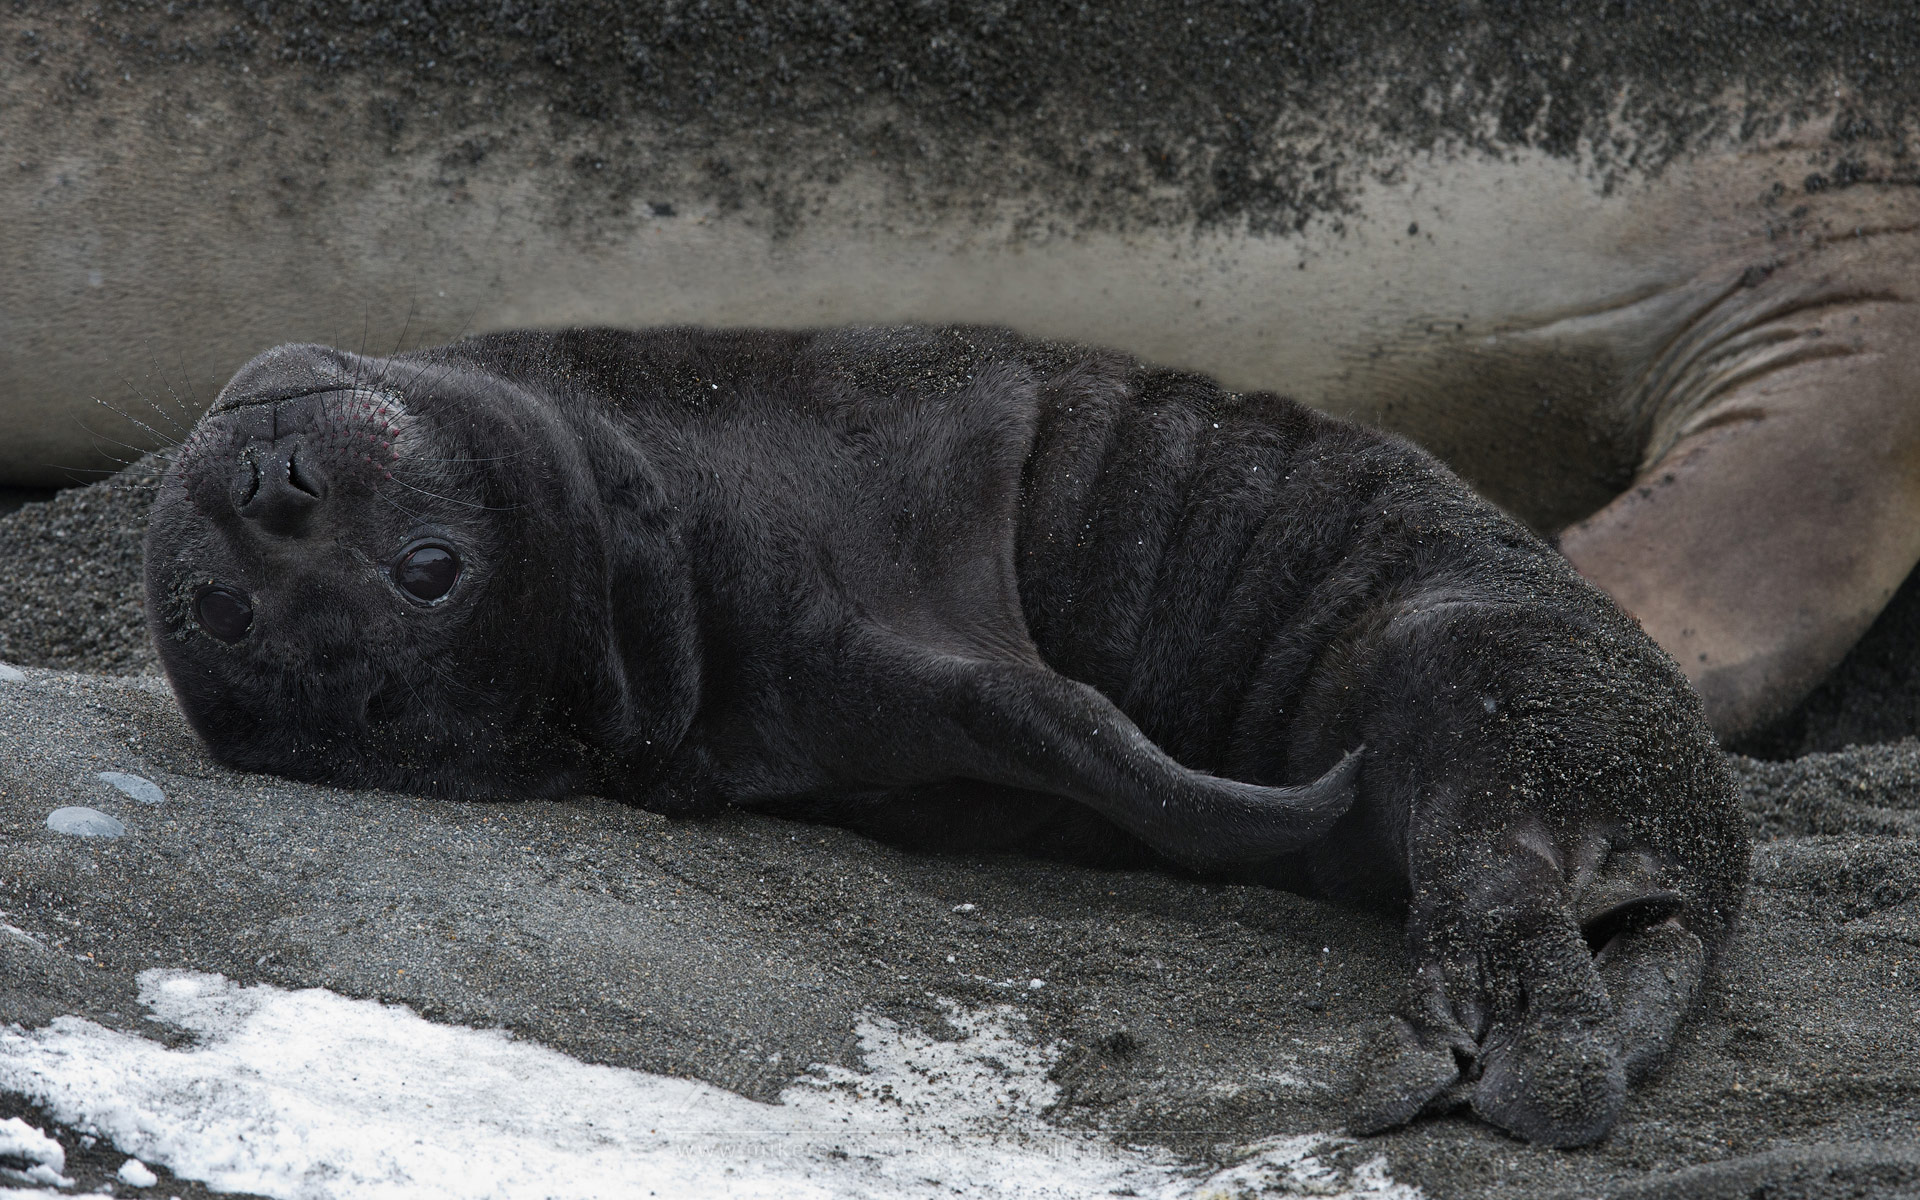 Newborn Southern Elephant Seal (Mirounga leonina) pup. South Georgia, Sub-Antarctic - Southern-Elephant-Seals-Fur-Seals-South-Georgia-Sub-Antarctic - Mike Reyfman Photography